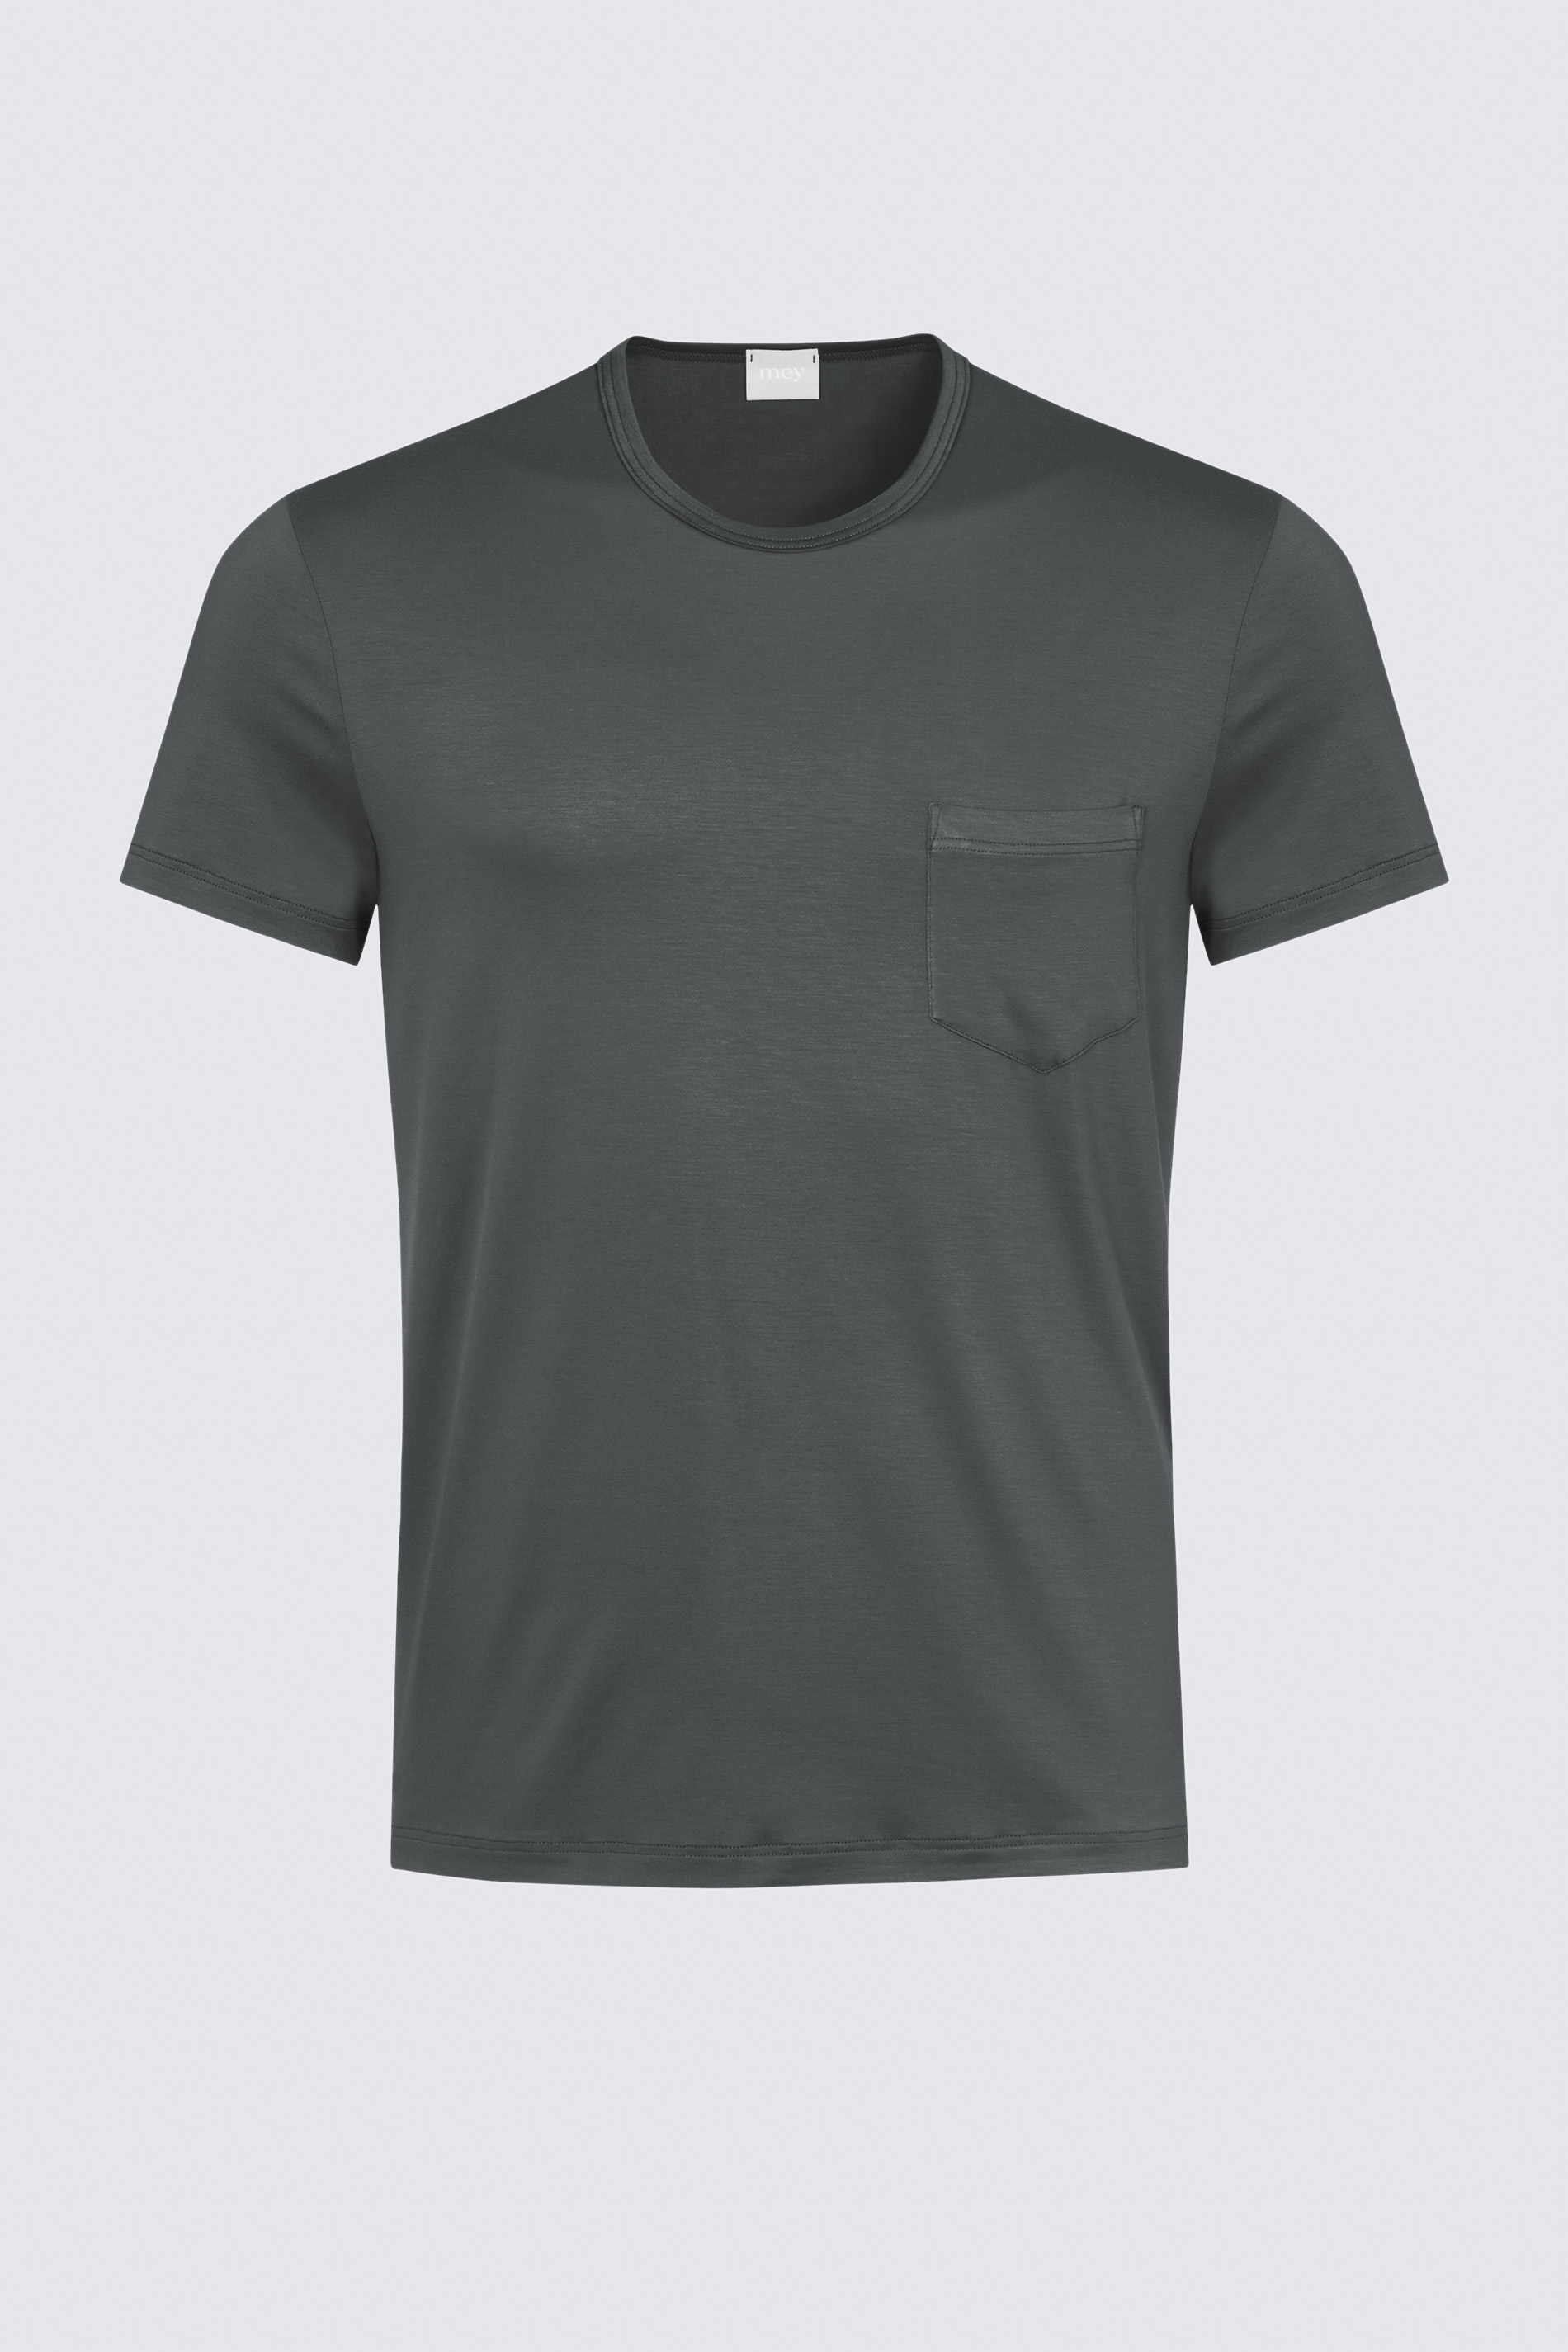 Shirt 1/2 sleeve Stormy Grey Serie Jefferson Modal Cut Out | mey®